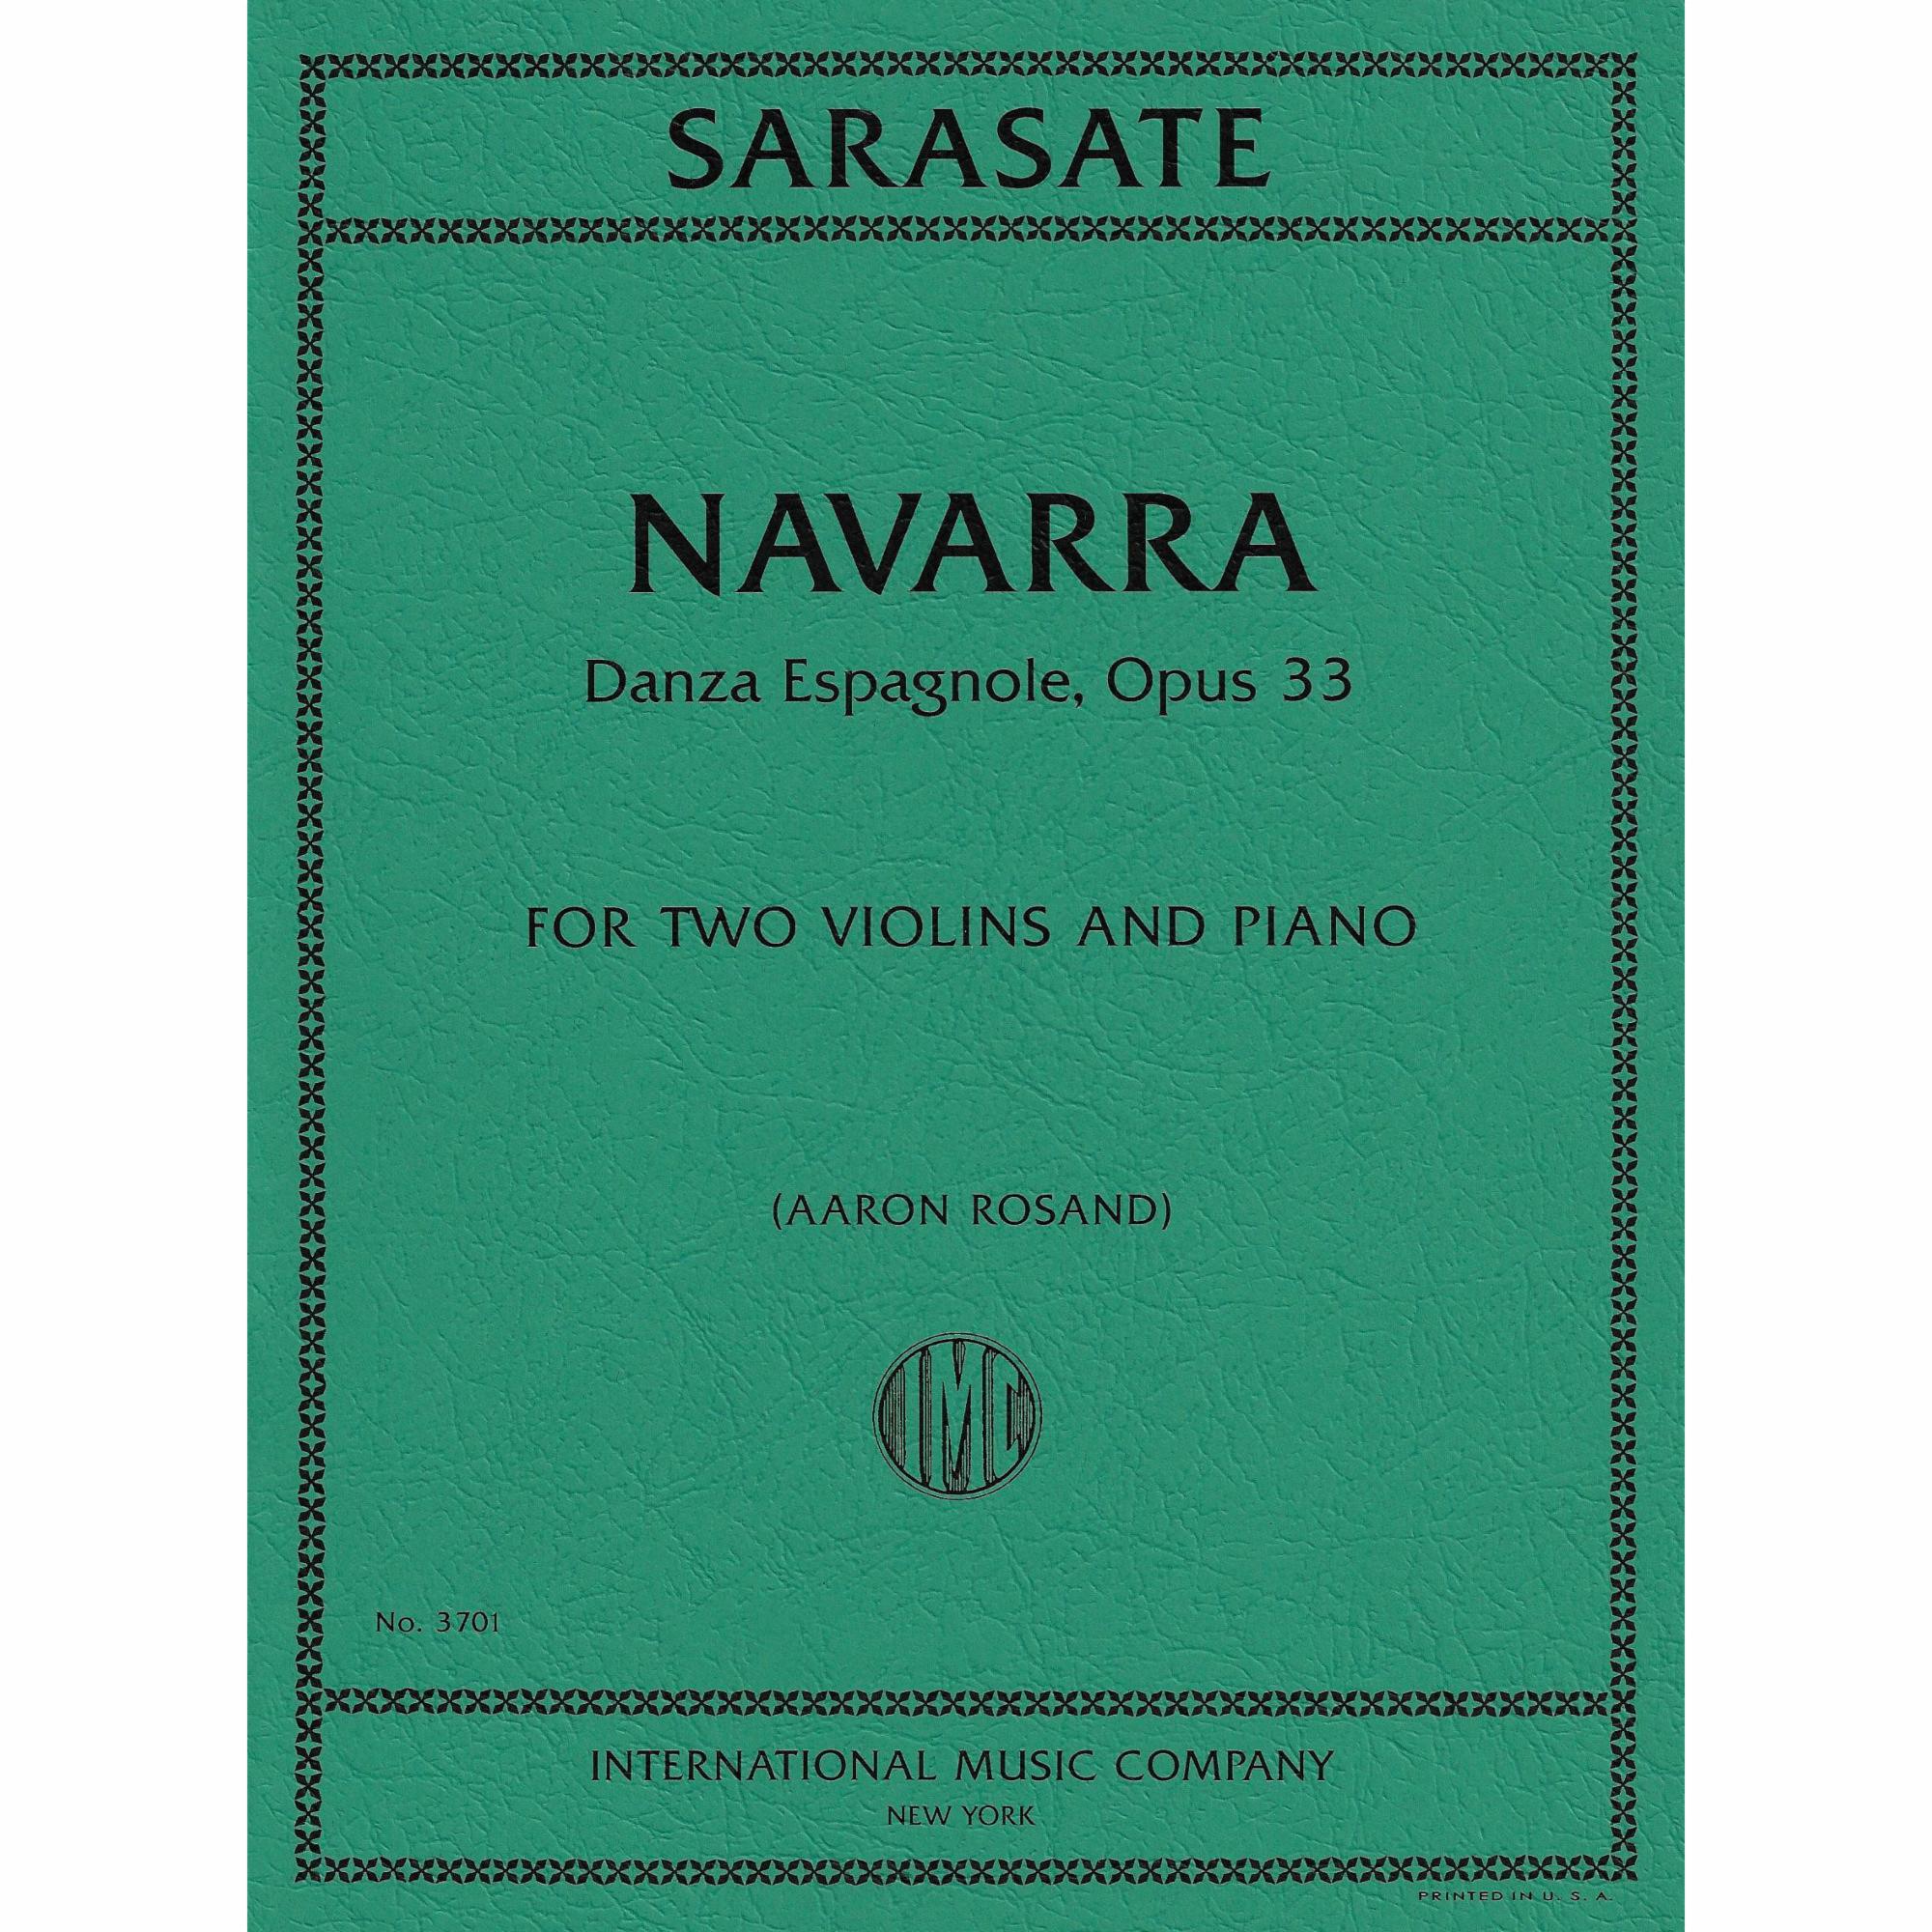 Sarasate -- Navarra, Danza Espagnole, Op. 33 for Two Violins and Piano